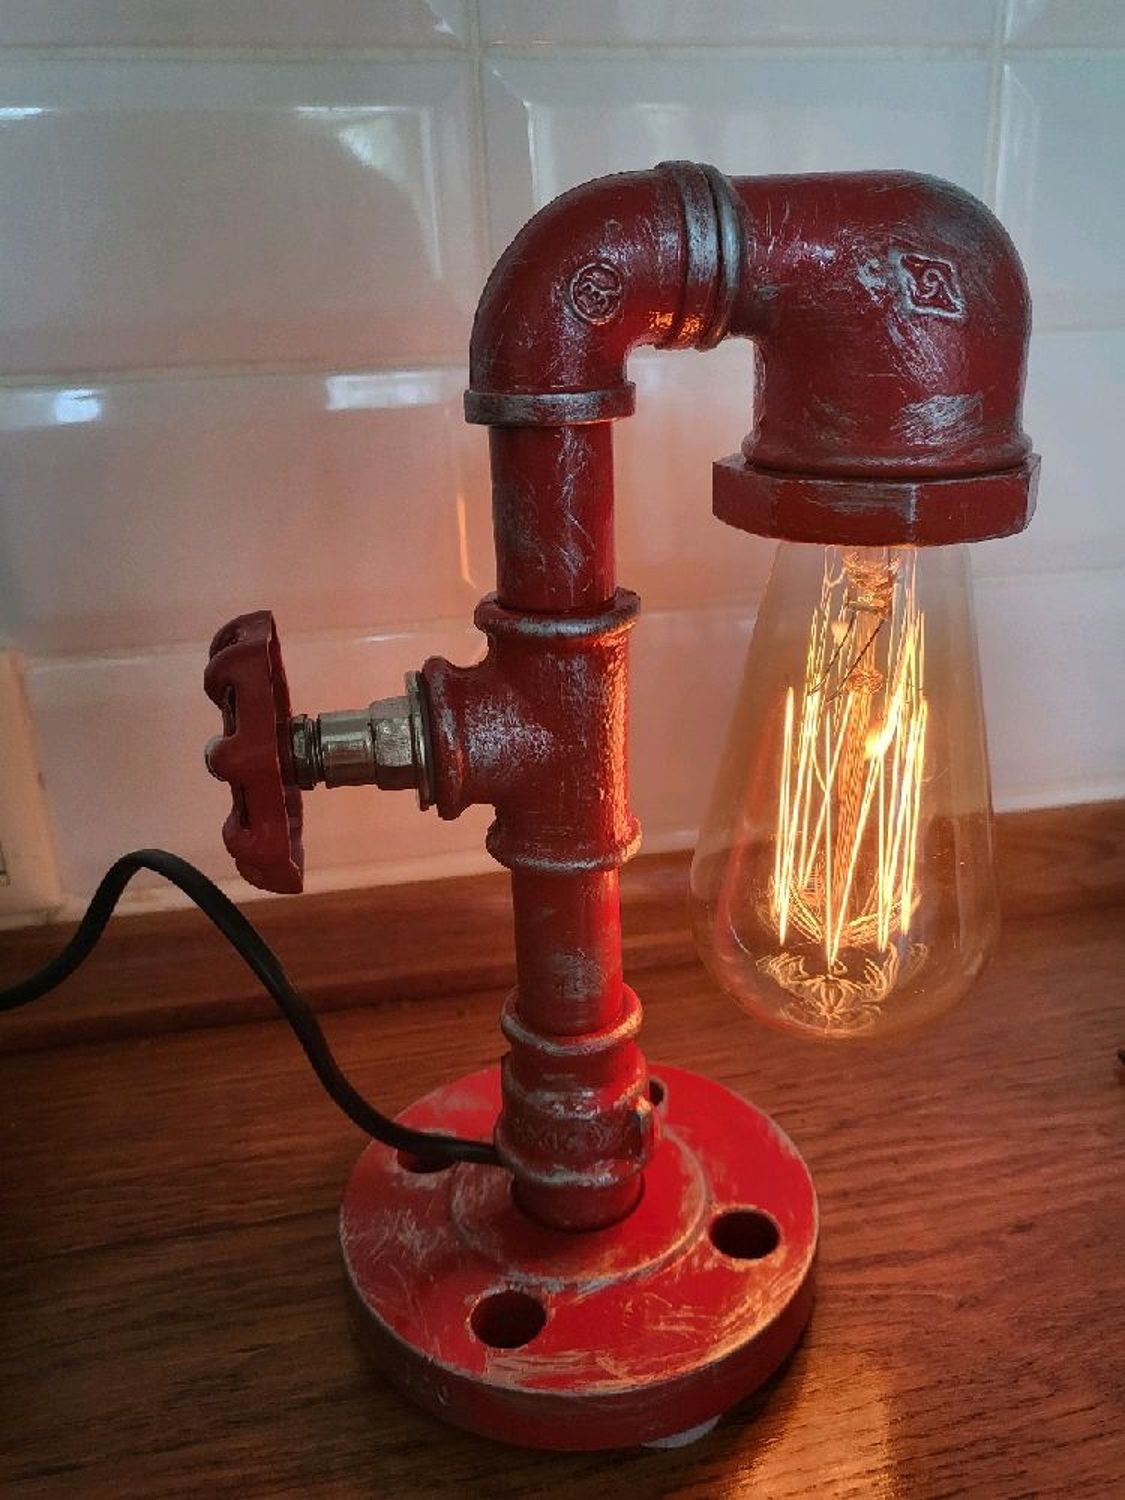 Photo №1 к отзыву покупателя Zajtseva anna о товаре Настольная лампа в стиле лофт, индастриал, стимпанк, ретро